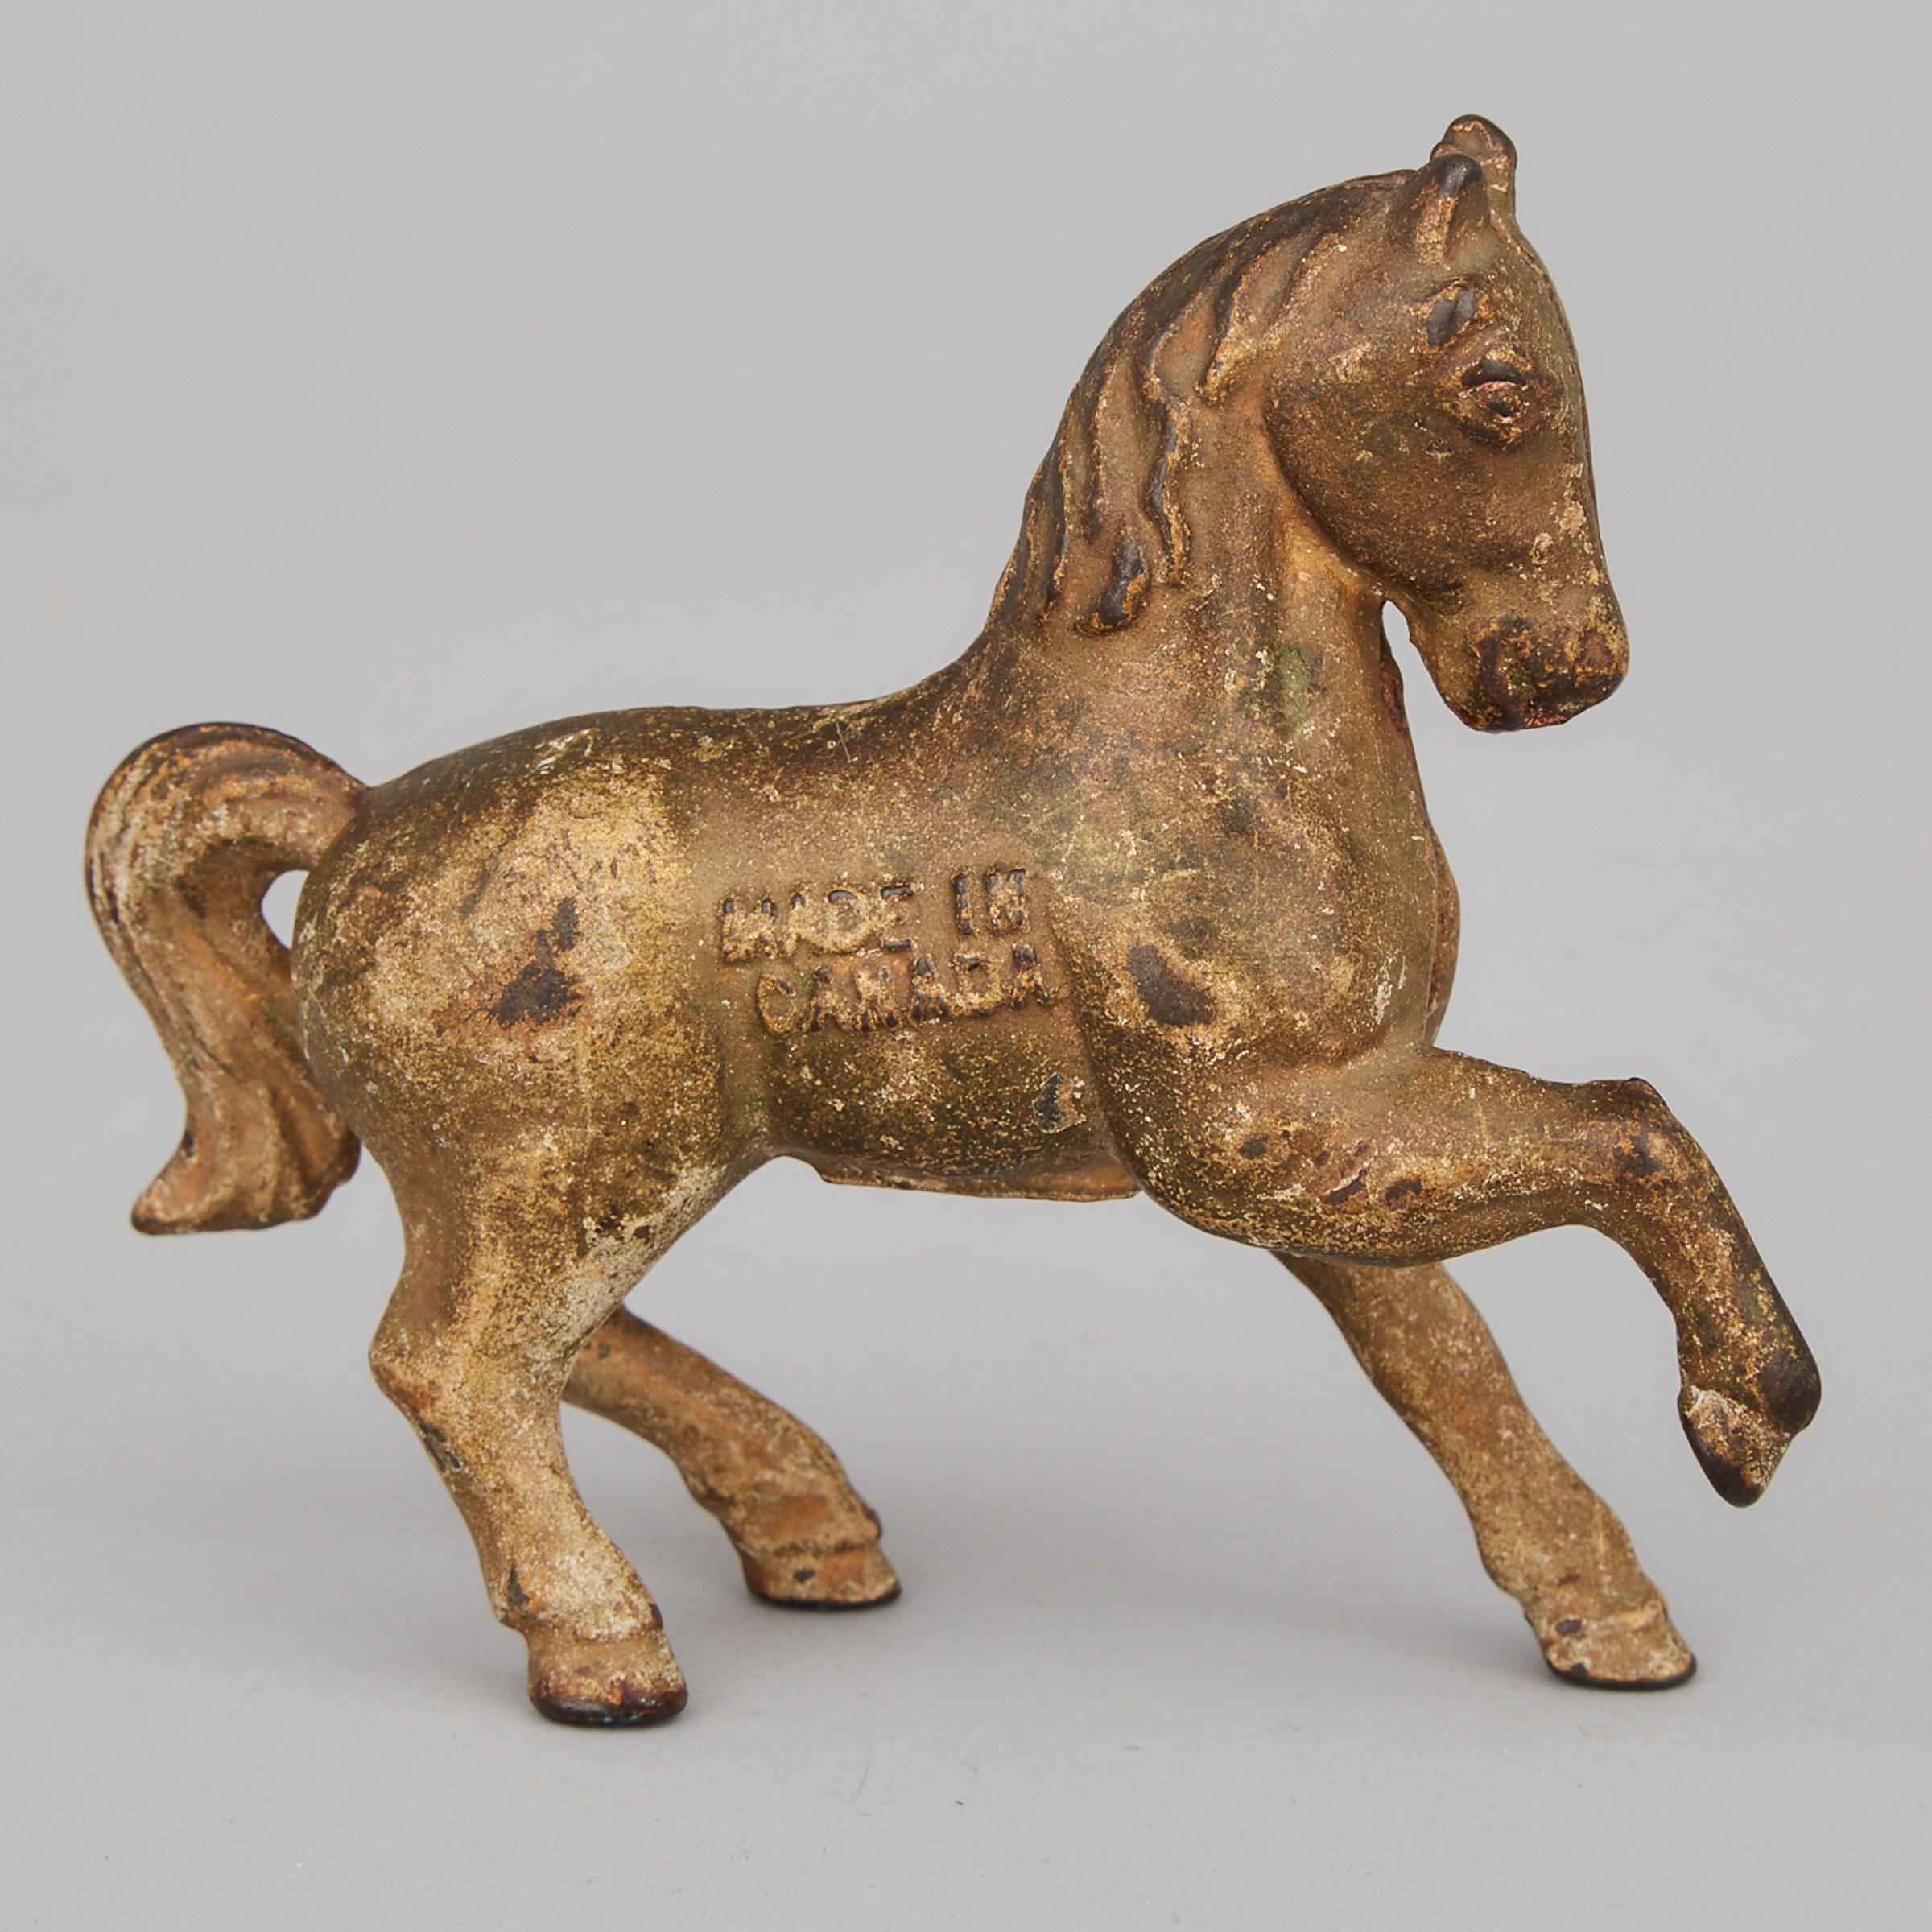 Canadian Gilt Cast Iron Horse Form Still Bank, Beaverton Toy Co. c.1918-1930